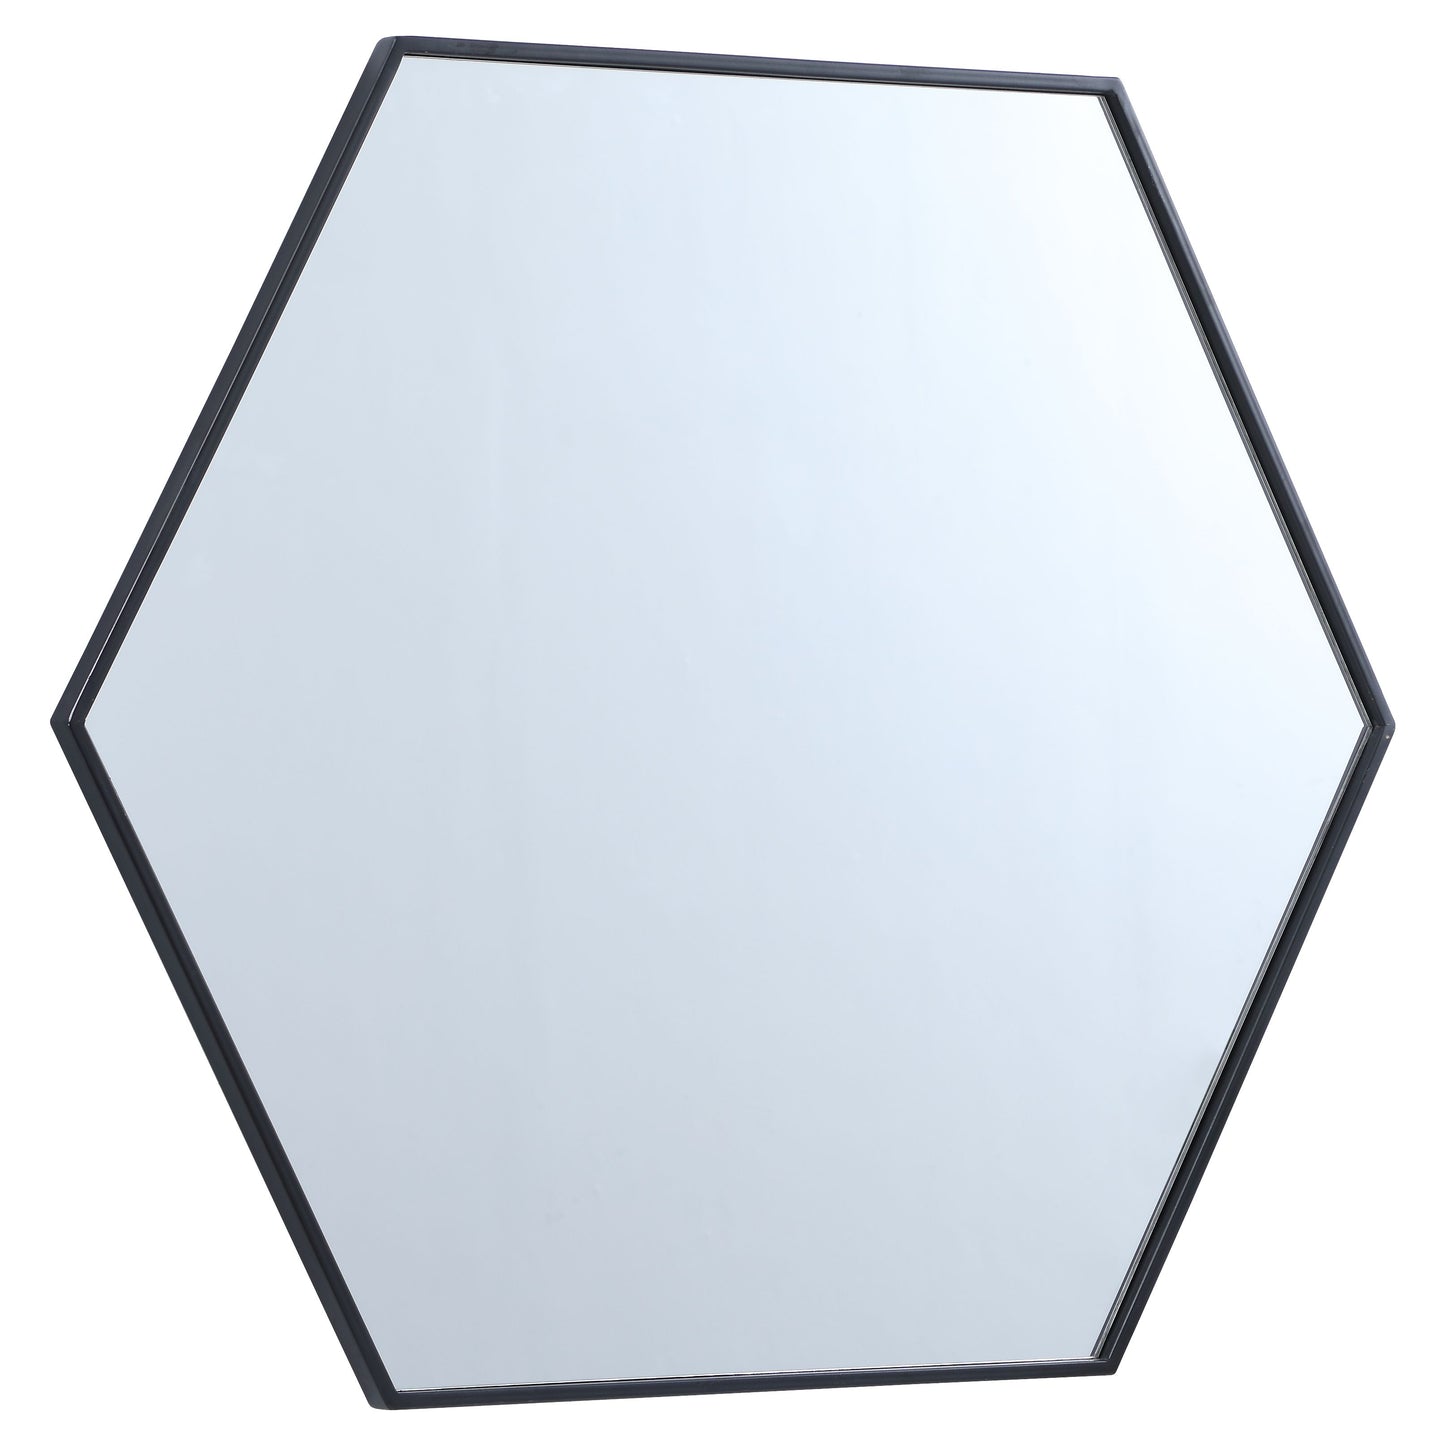 MR4538BK Decker 38" x 32" Metal Framed Hexagon Mirror in Black